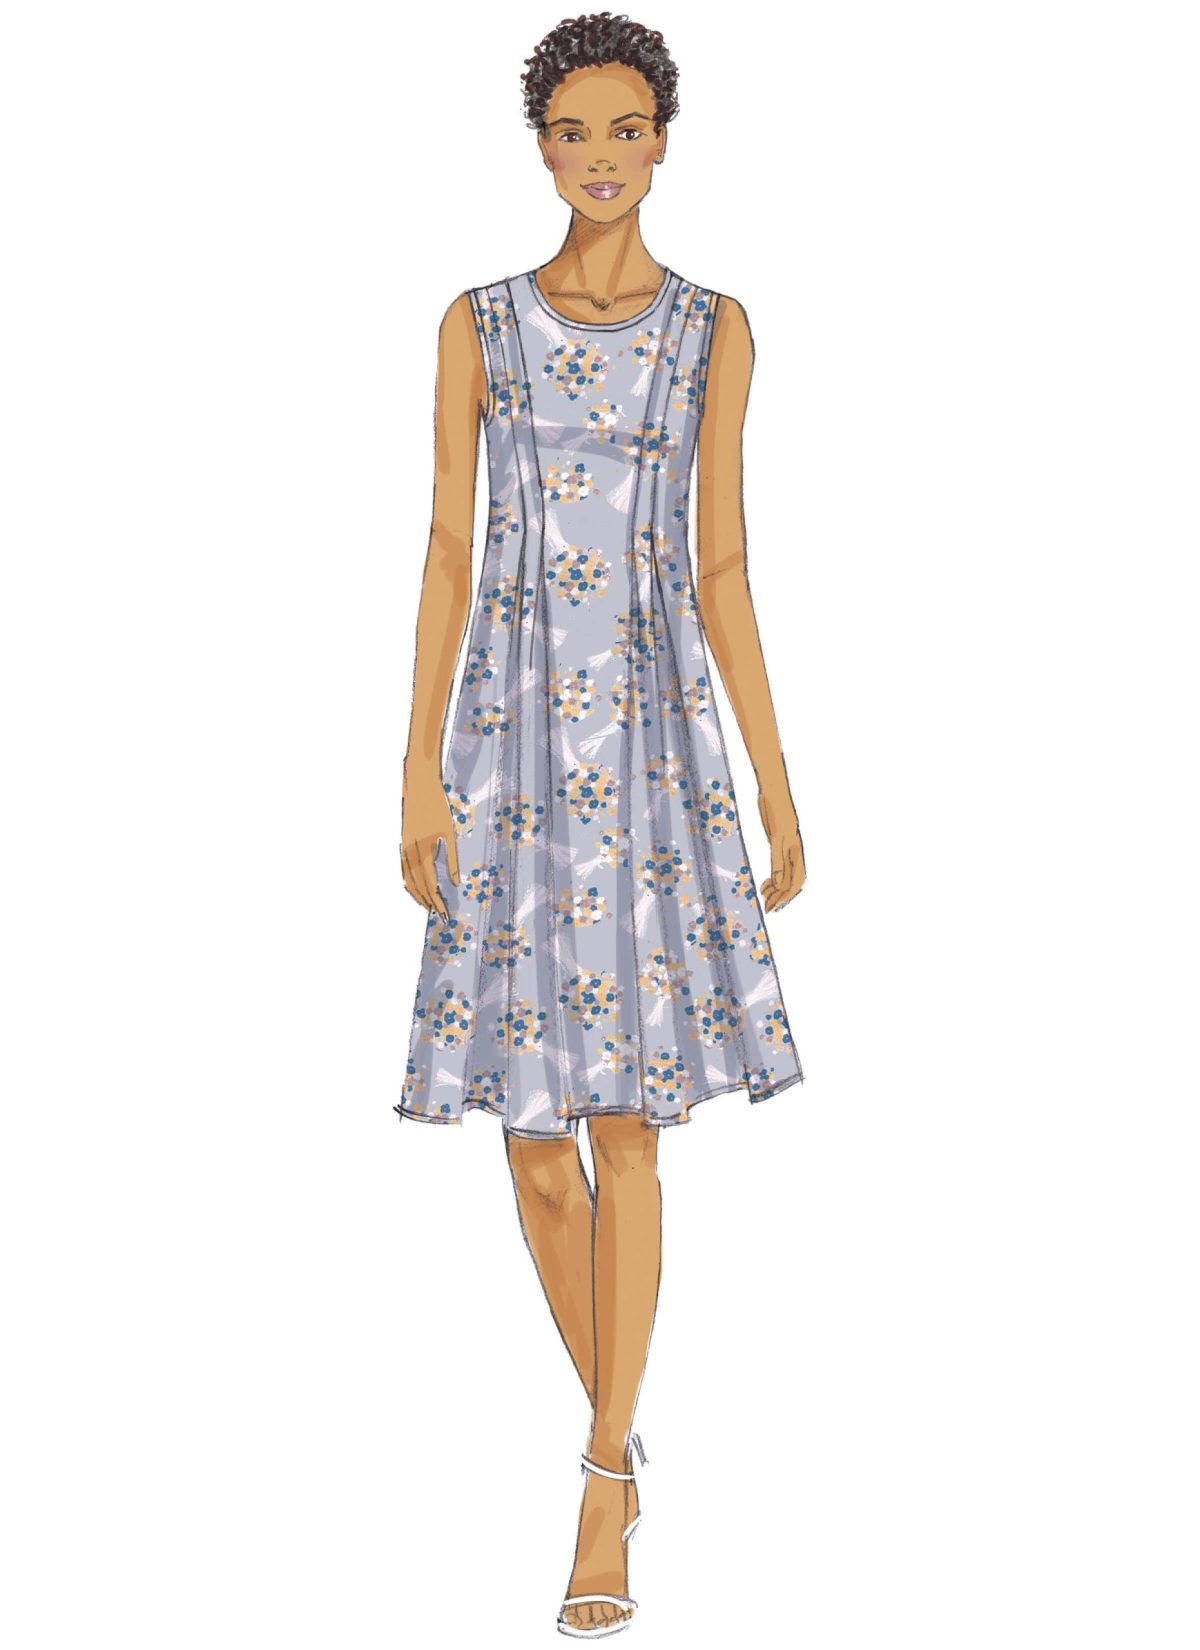 Vogue Patterns V9236 Misses' Released-Pleat Fit-and-Flare Dresses